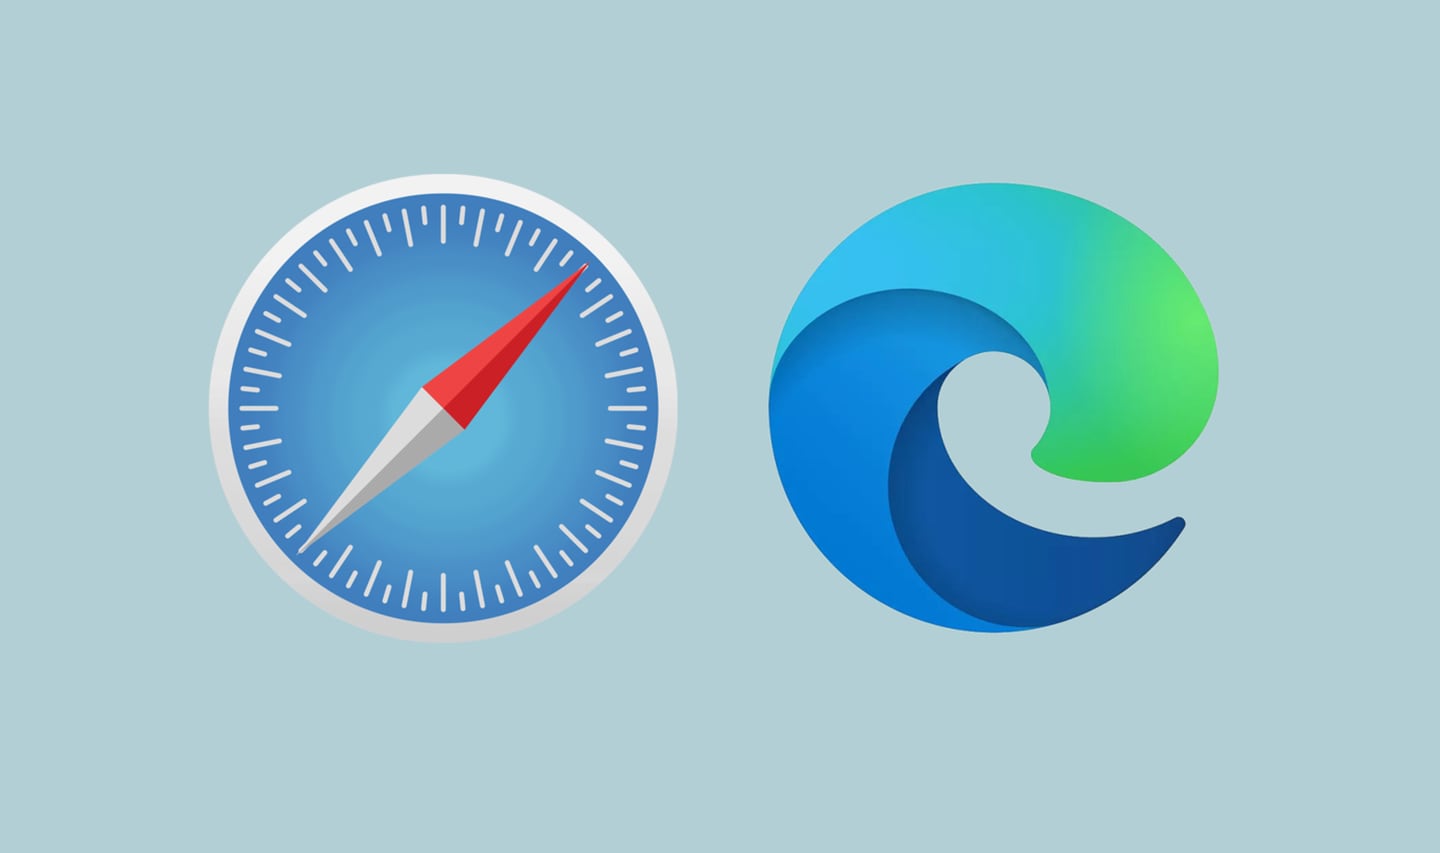 Safari (left) and Microsoft Edge (right) logos.